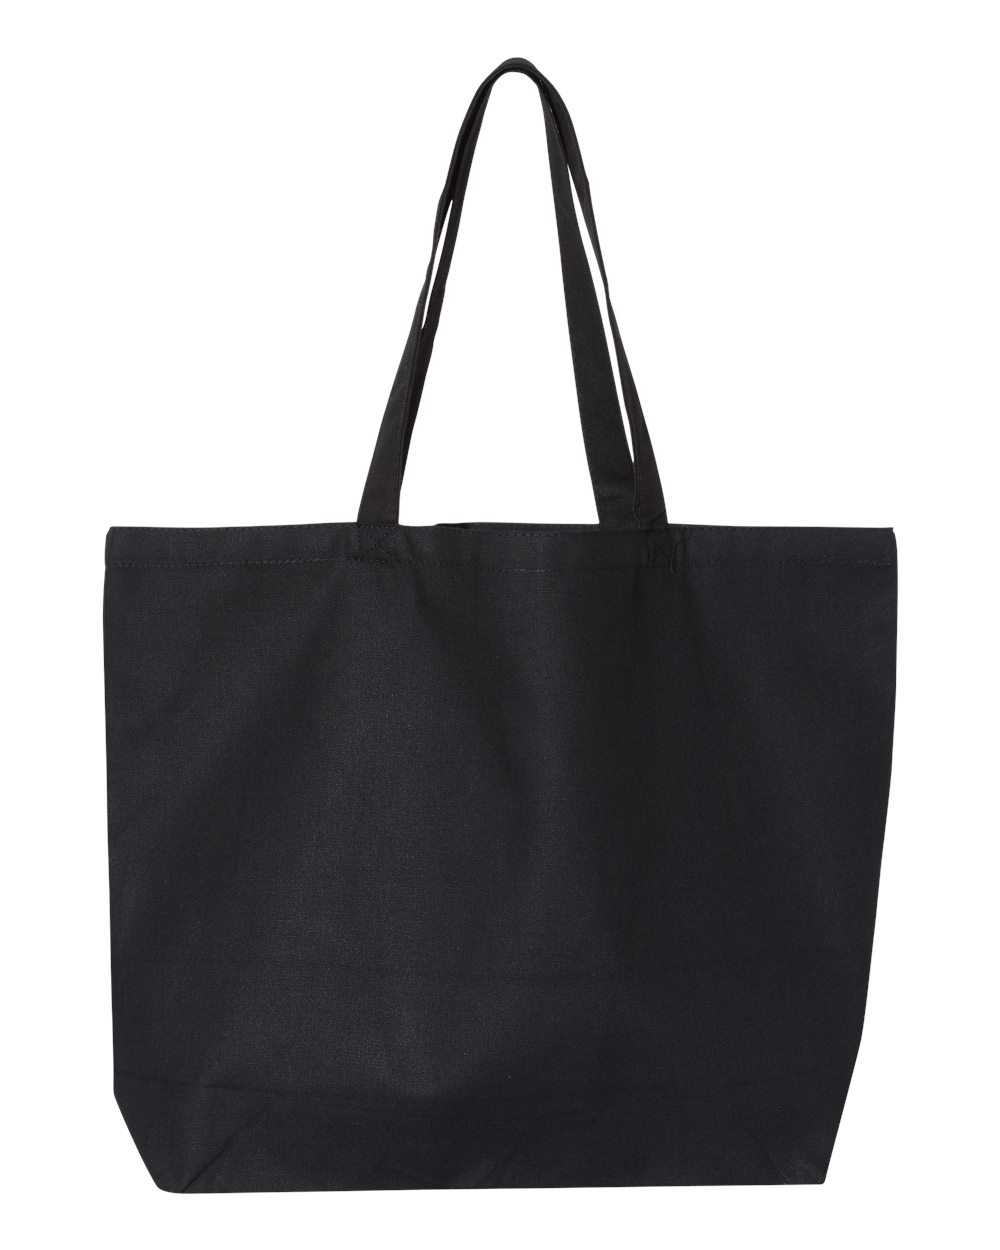 OAD Canvas Shopper Jumbo Tote Hand Bag OAD108 20x15x5 | eBay